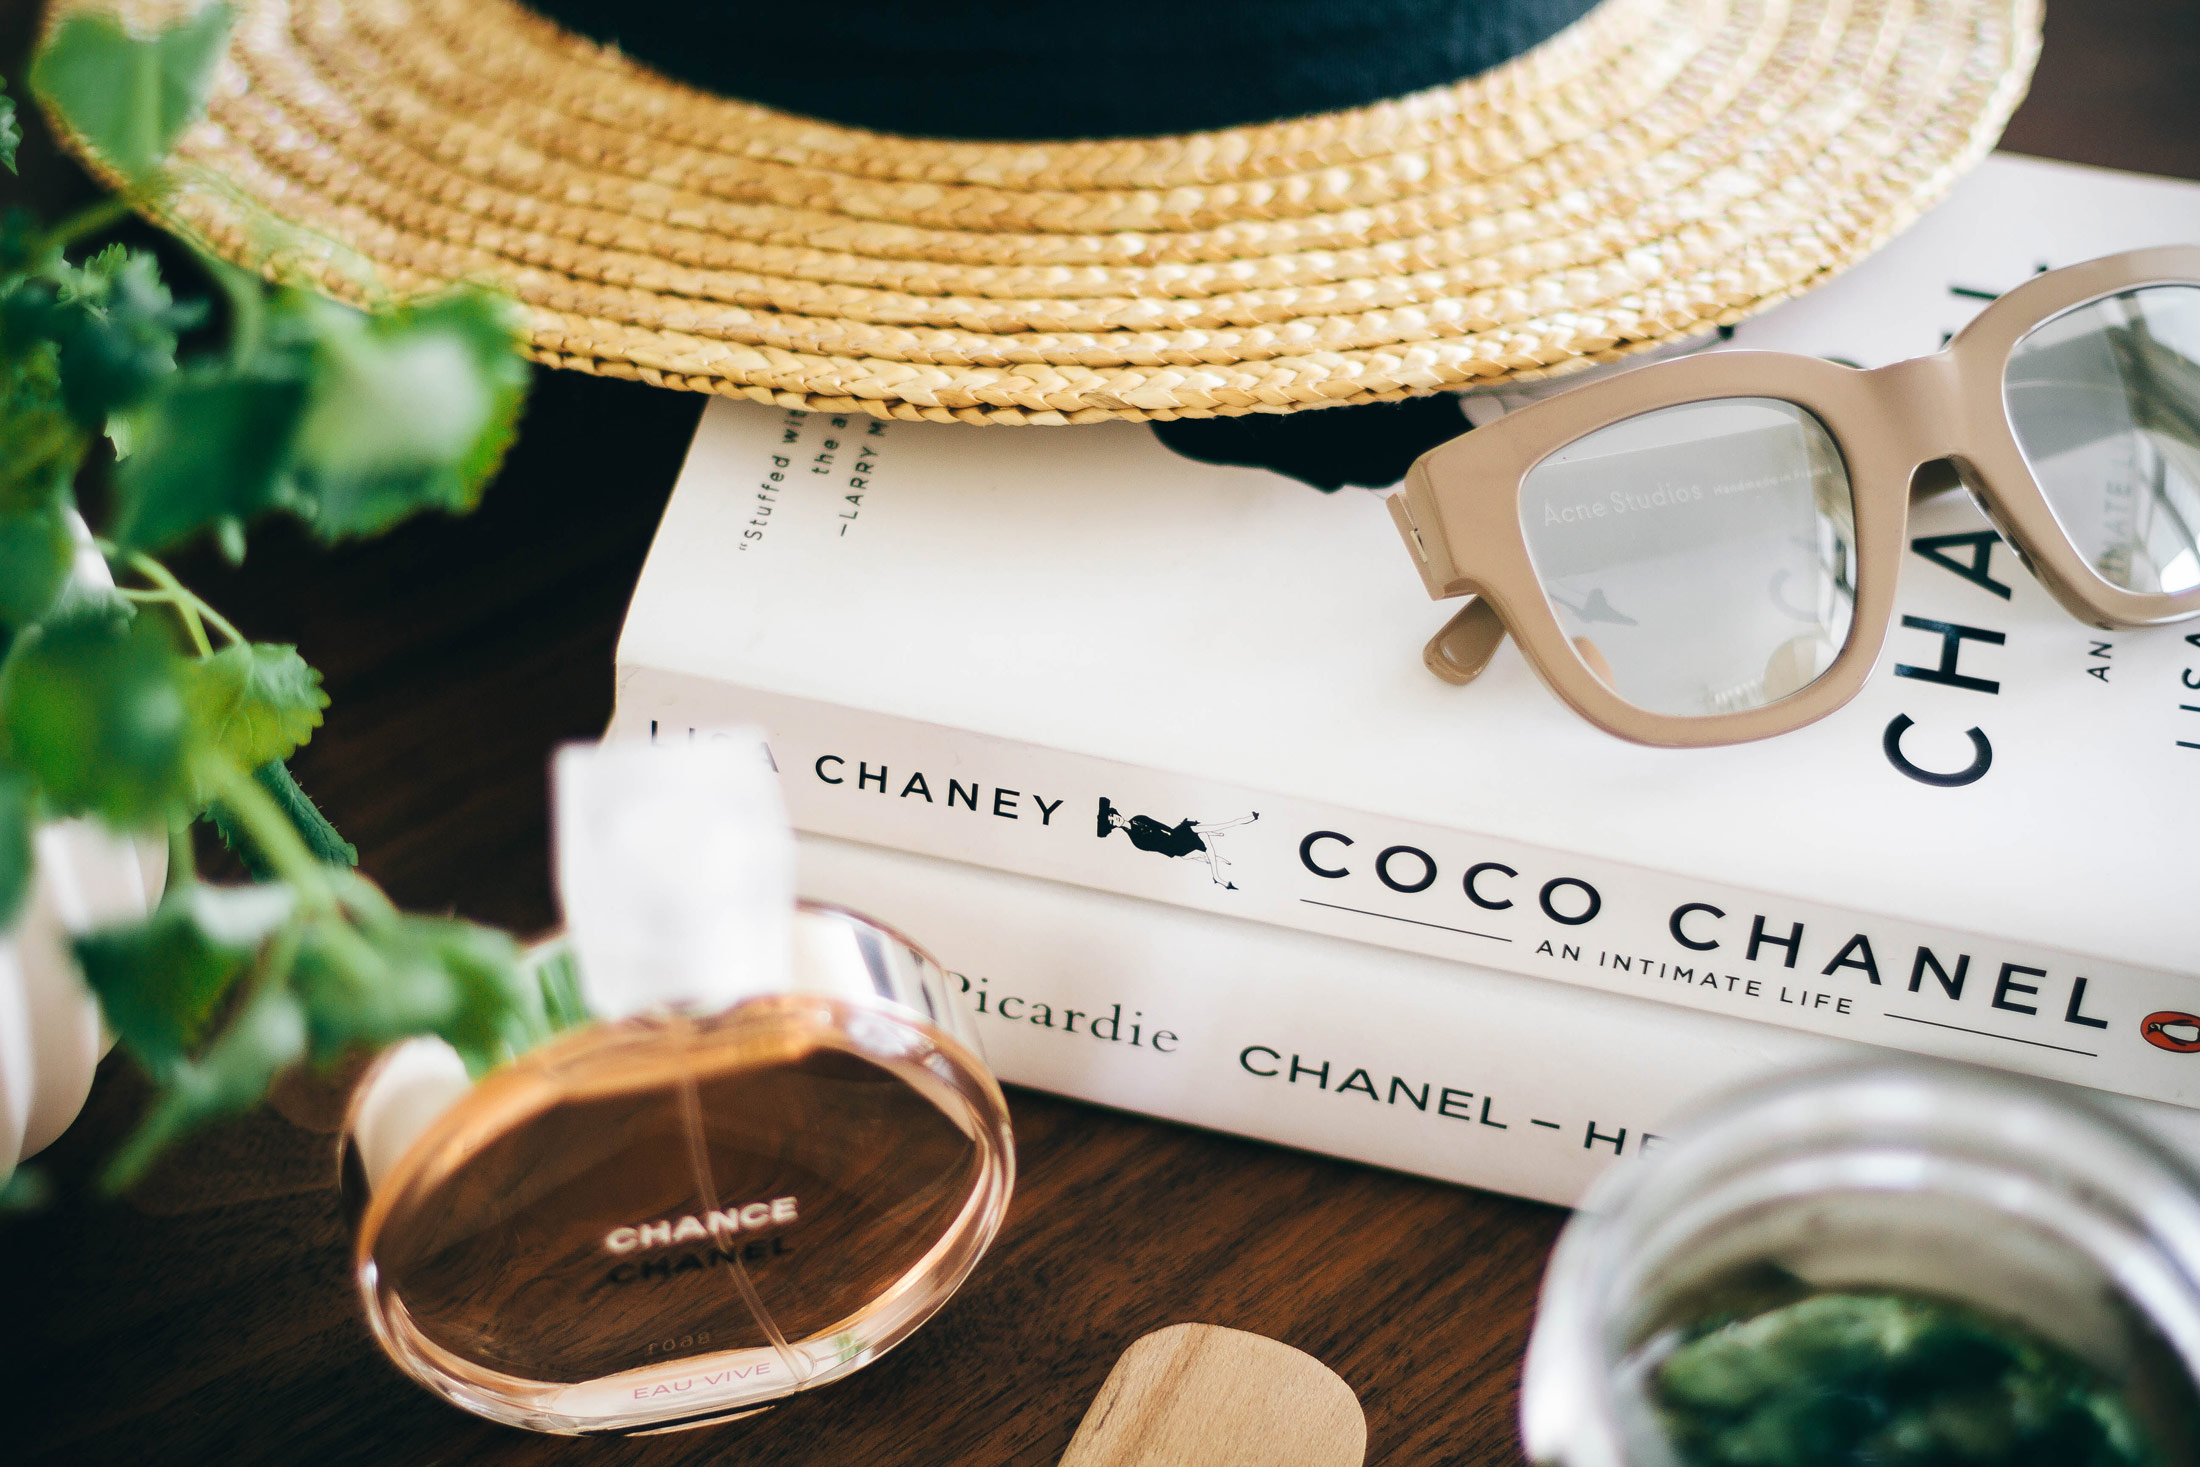 Chanel's new perfume: Chance Chanel Eau Vive